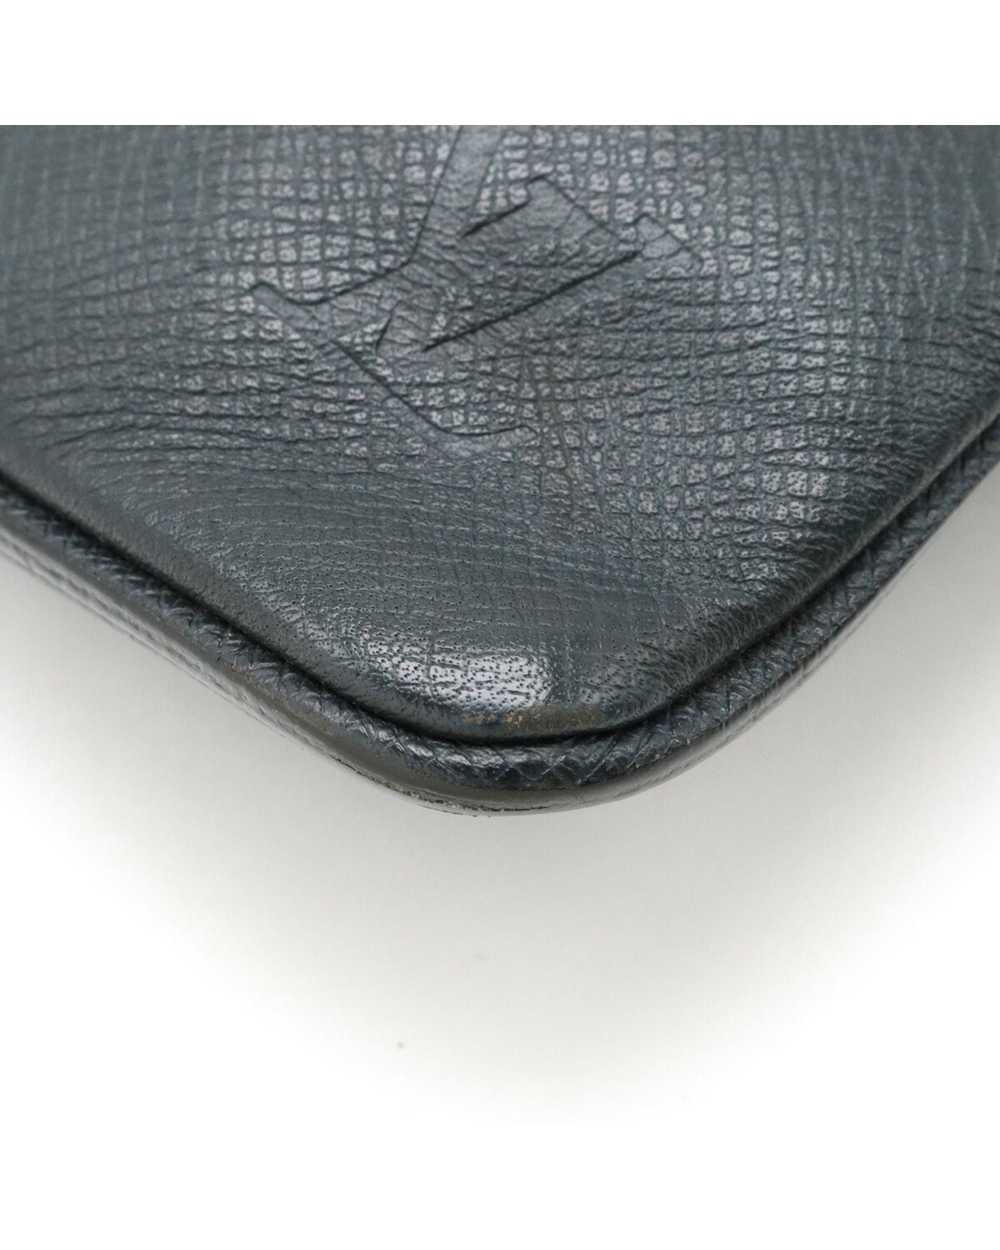 Louis Vuitton Elegant Leather Shoulder Bag - image 3